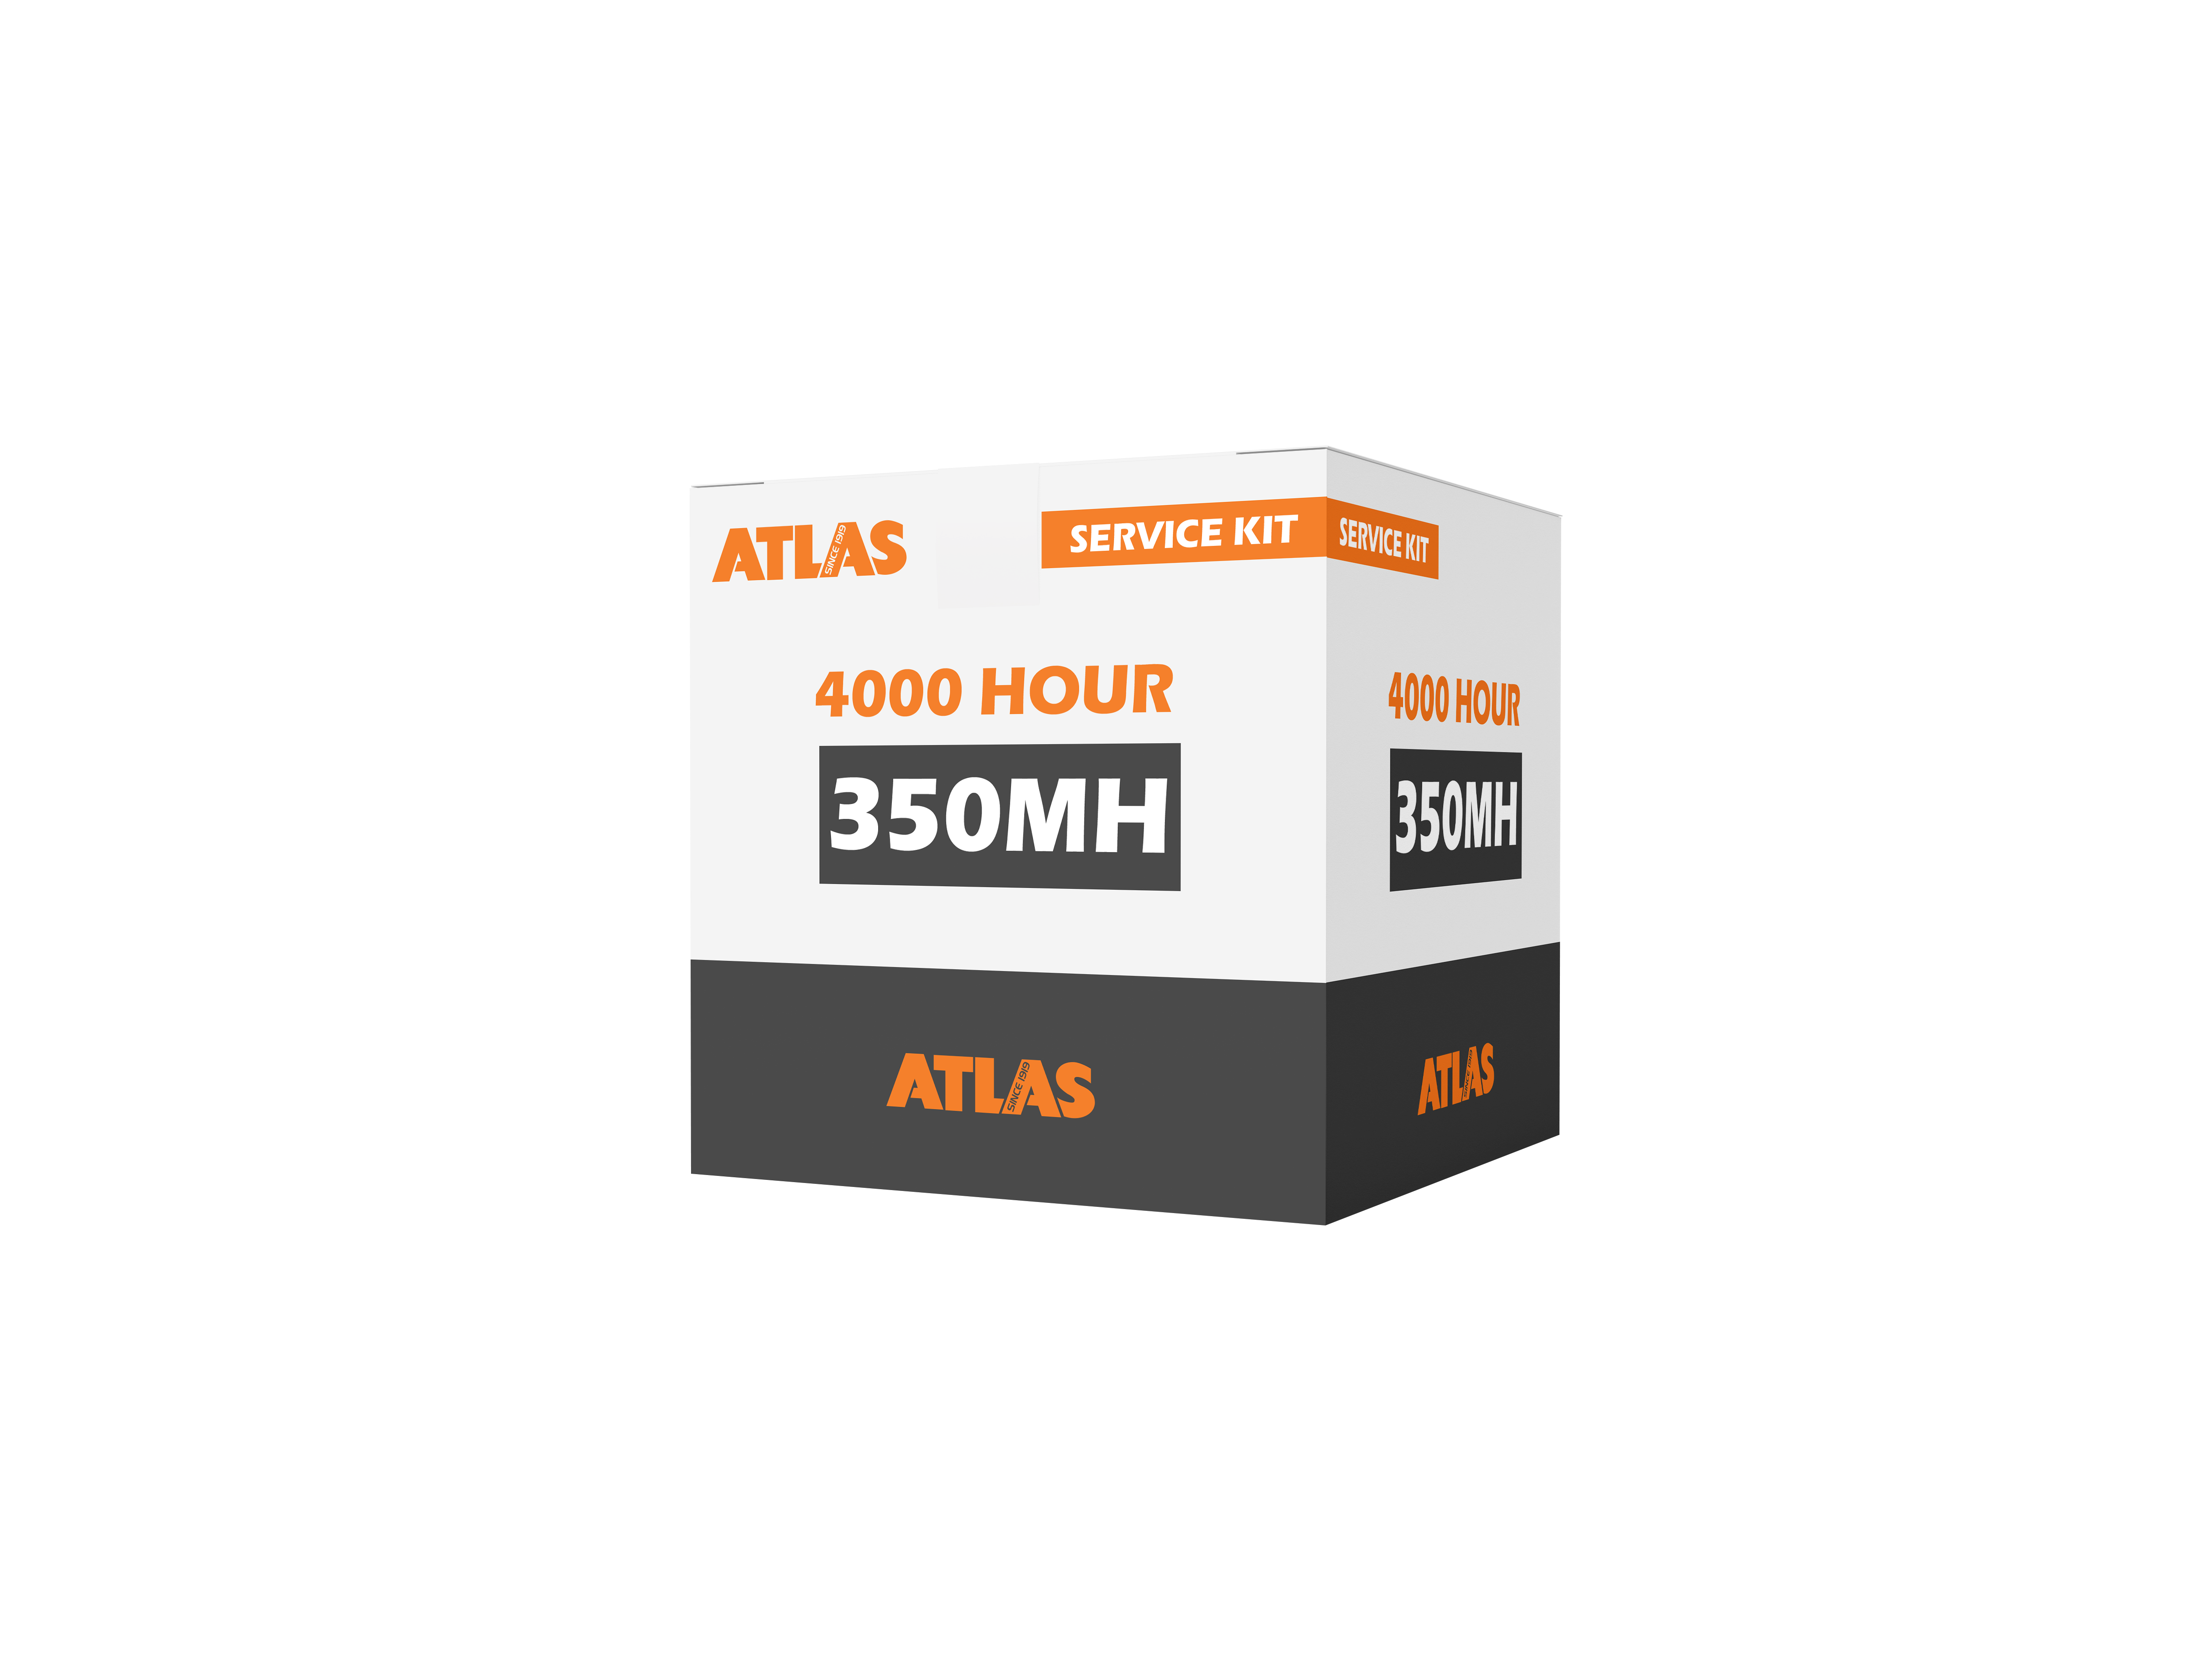 Atlas 350MH 4000 Hour Service Kit (351 series)